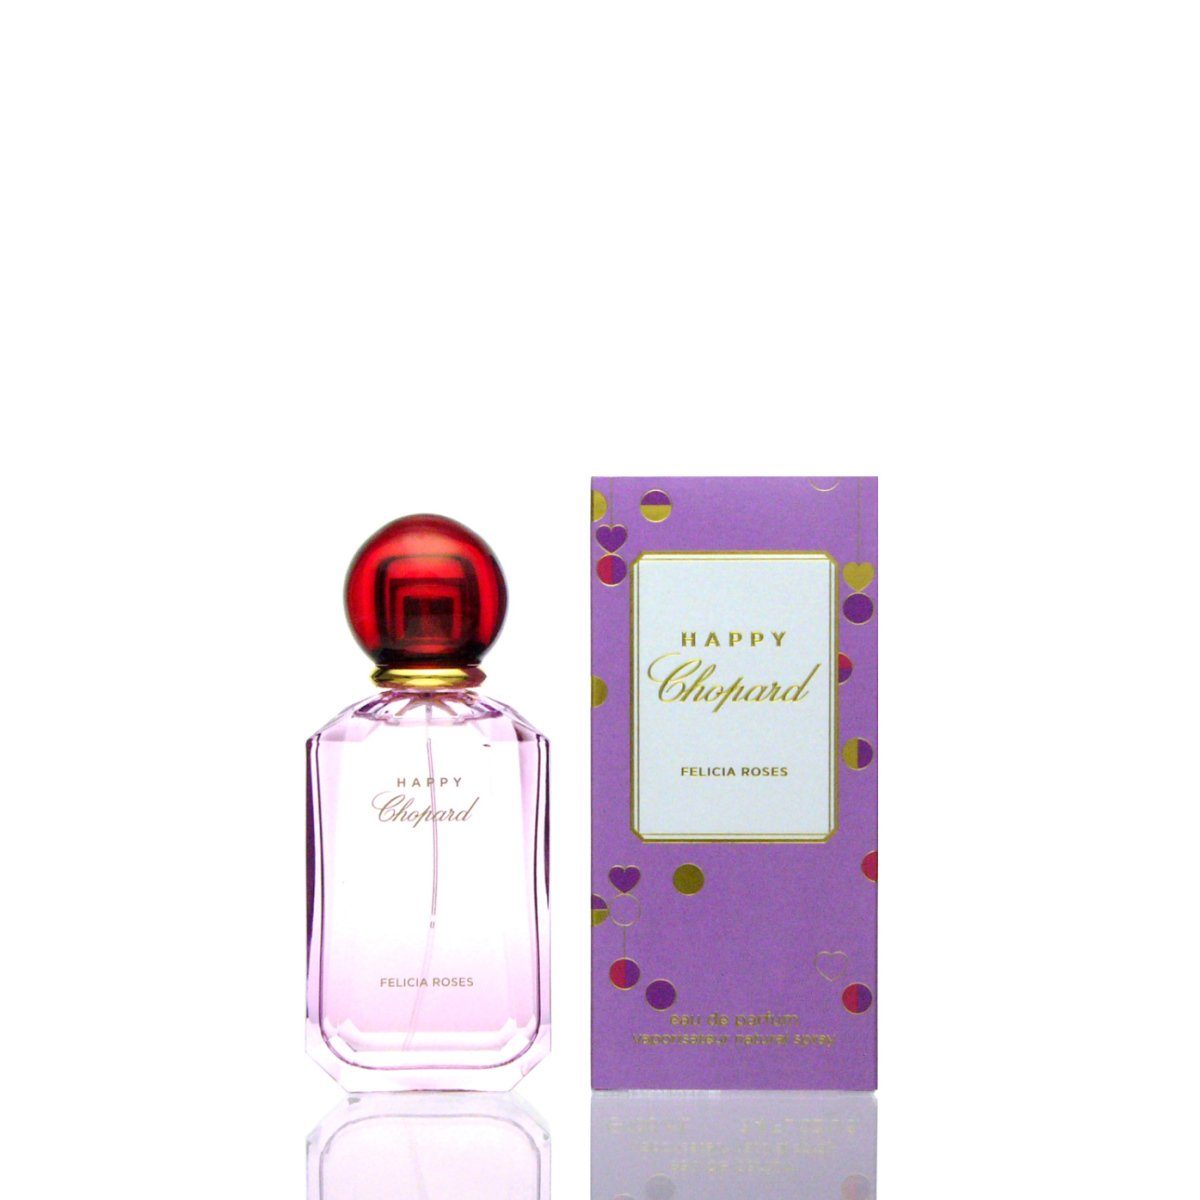 Chopard Eau de Parfum Chopard Happy Chopard Felicia Roses Eau de Parfum 40 ml | Eau de Parfum